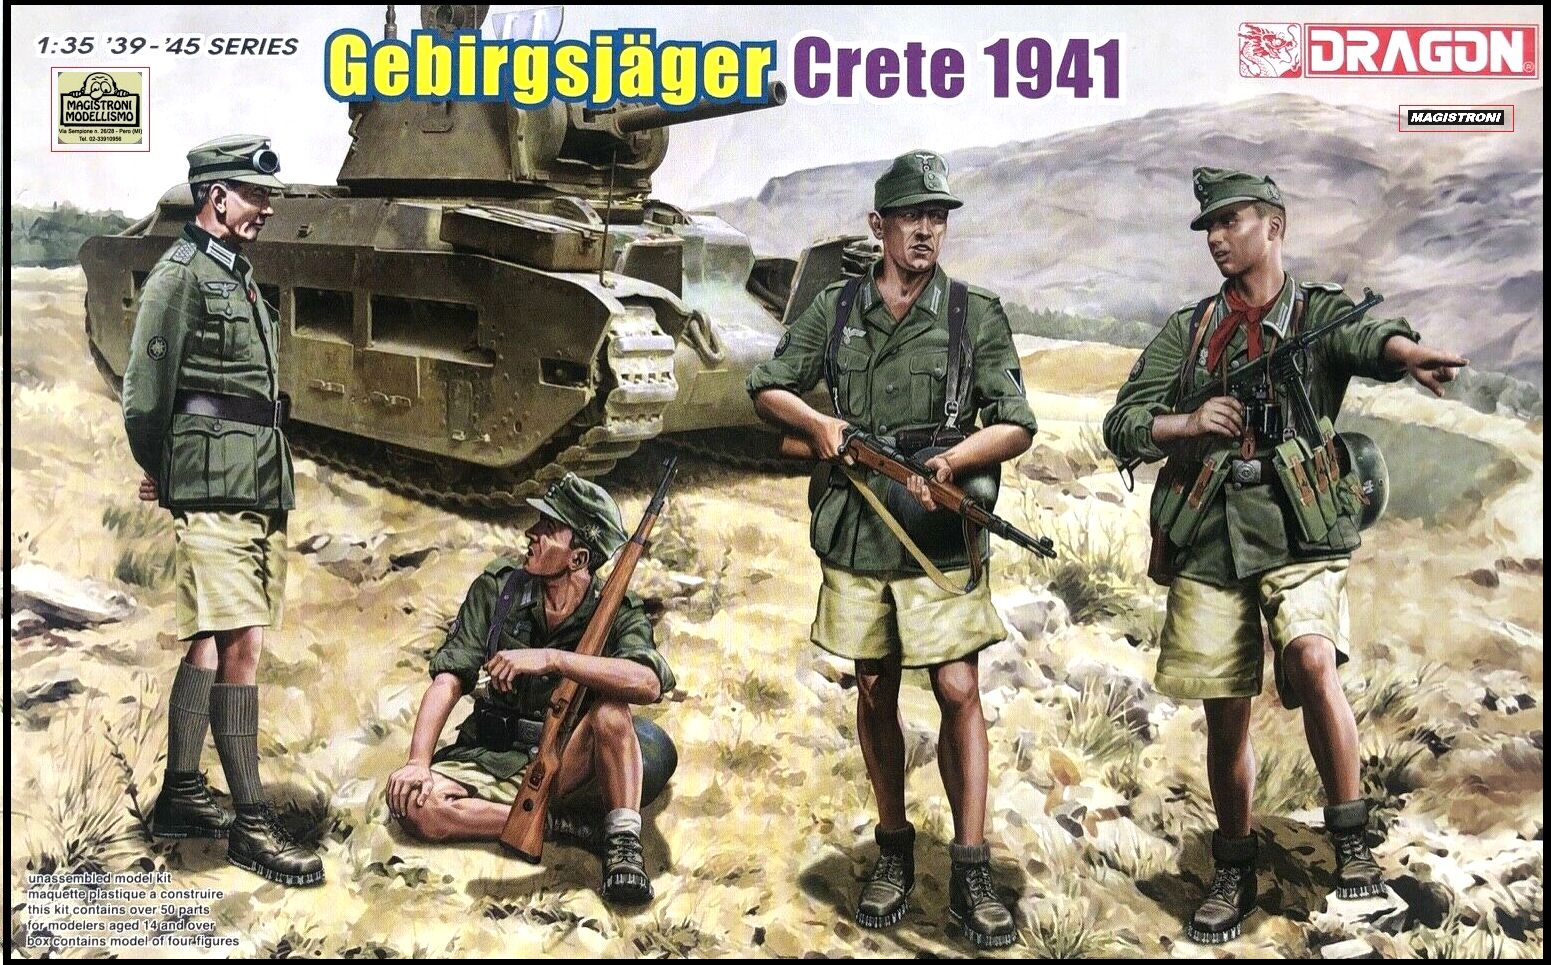 GEBIRGSJAGER CRETE 1941